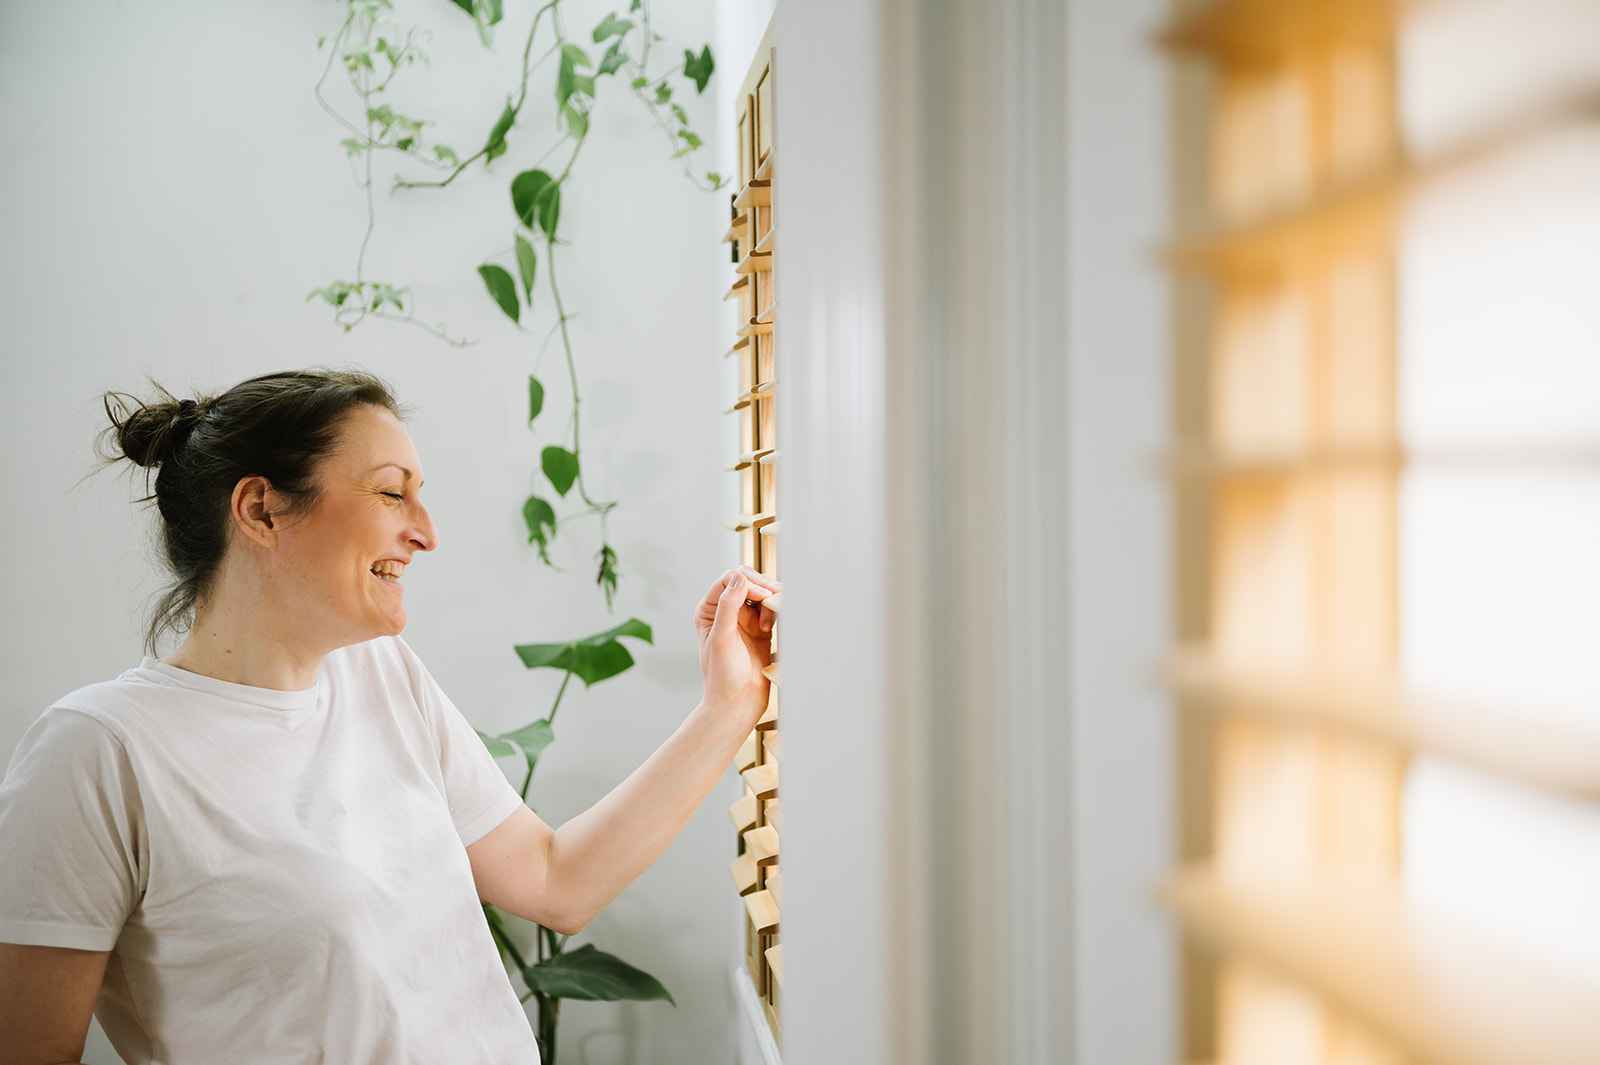 woman looking through window shutters wearing white tshirt